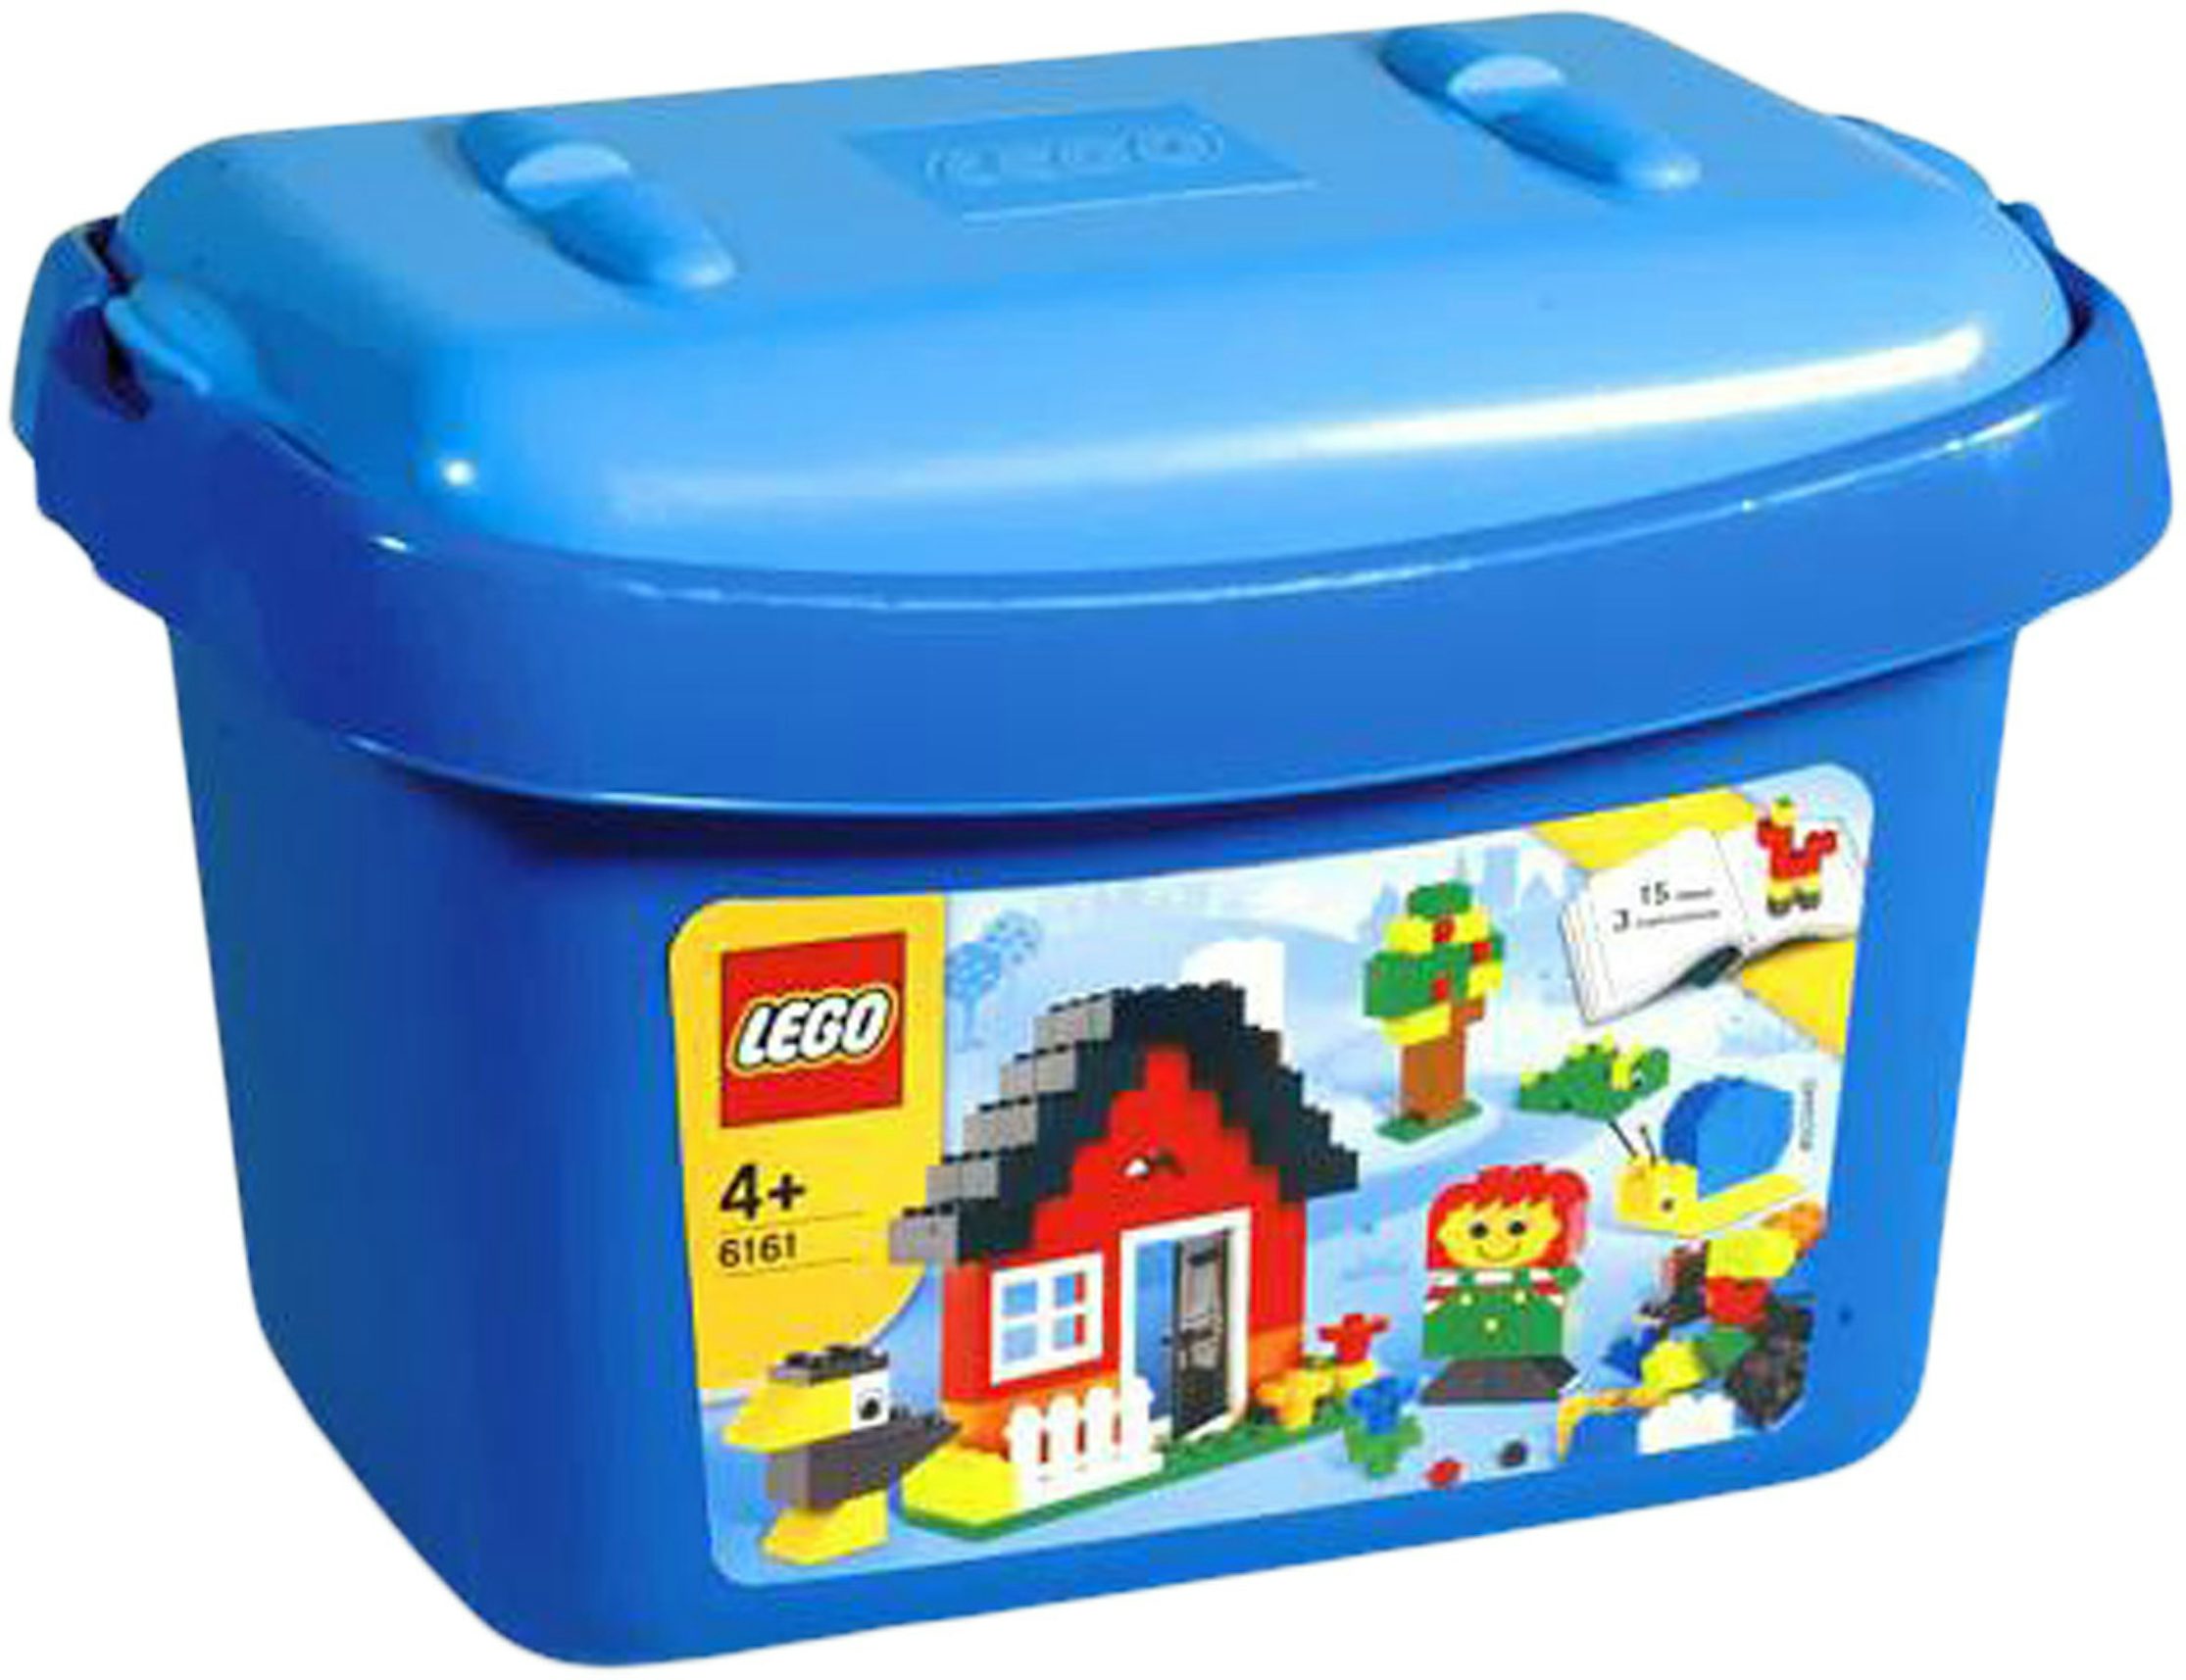 LEGO Small Blue Brick Box Set 6161 - US